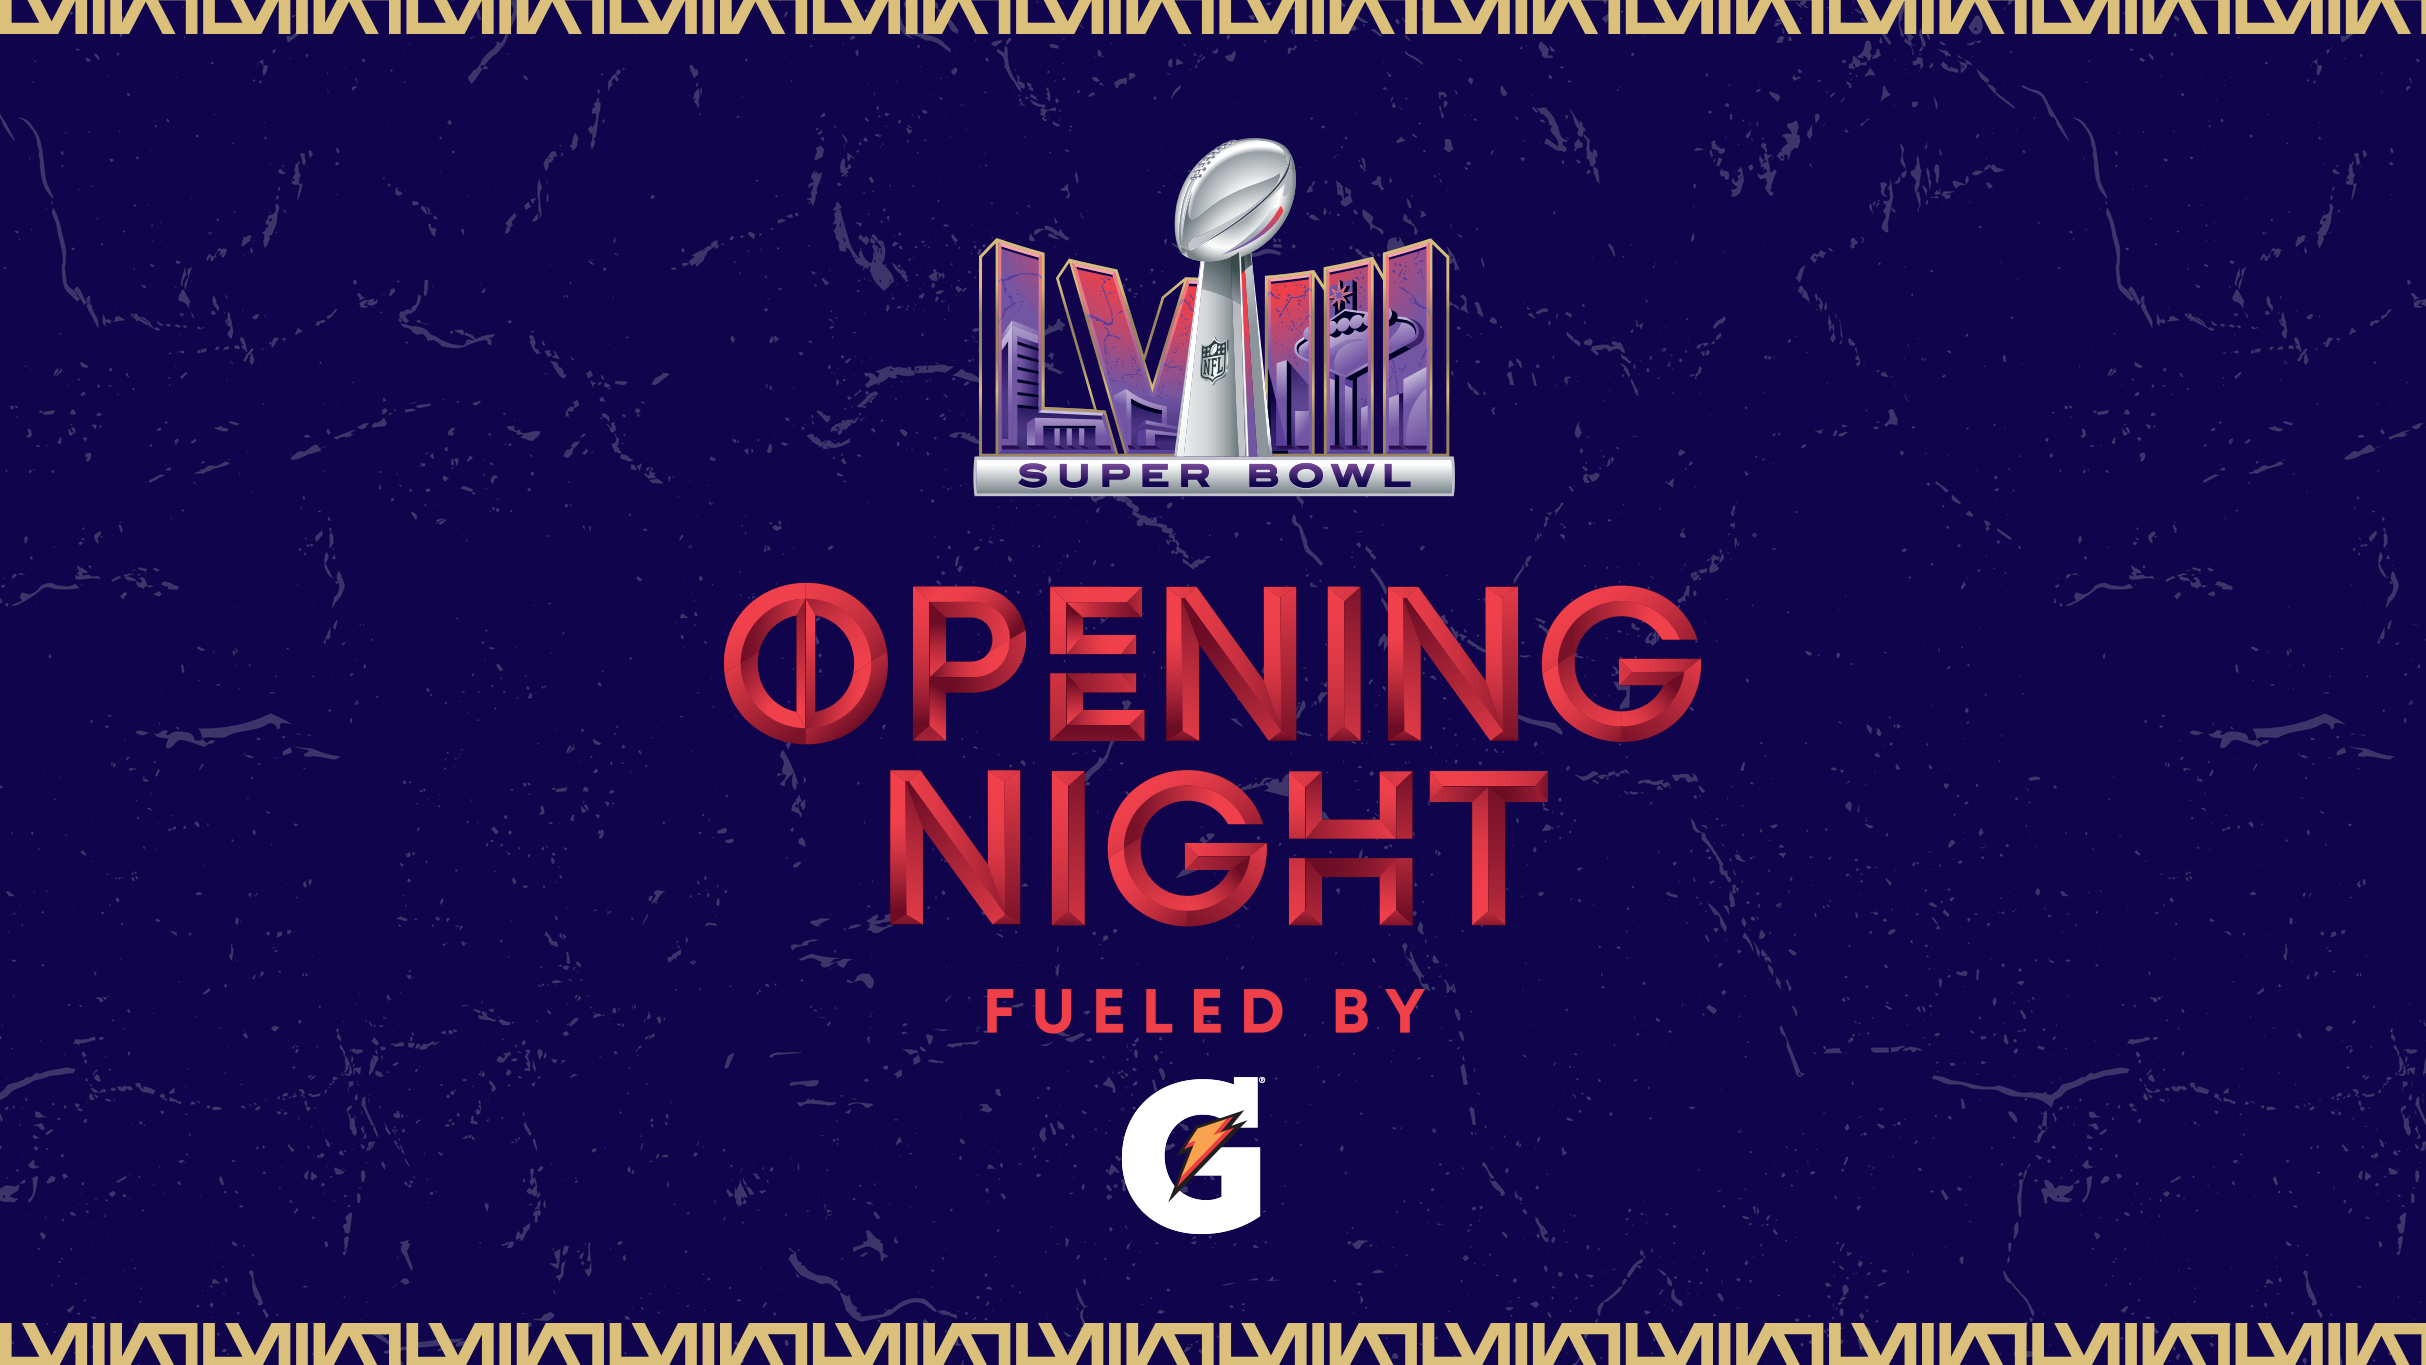 Super Bowl Opening Night fueled by Gatorade Tickets Las Vegas, NV